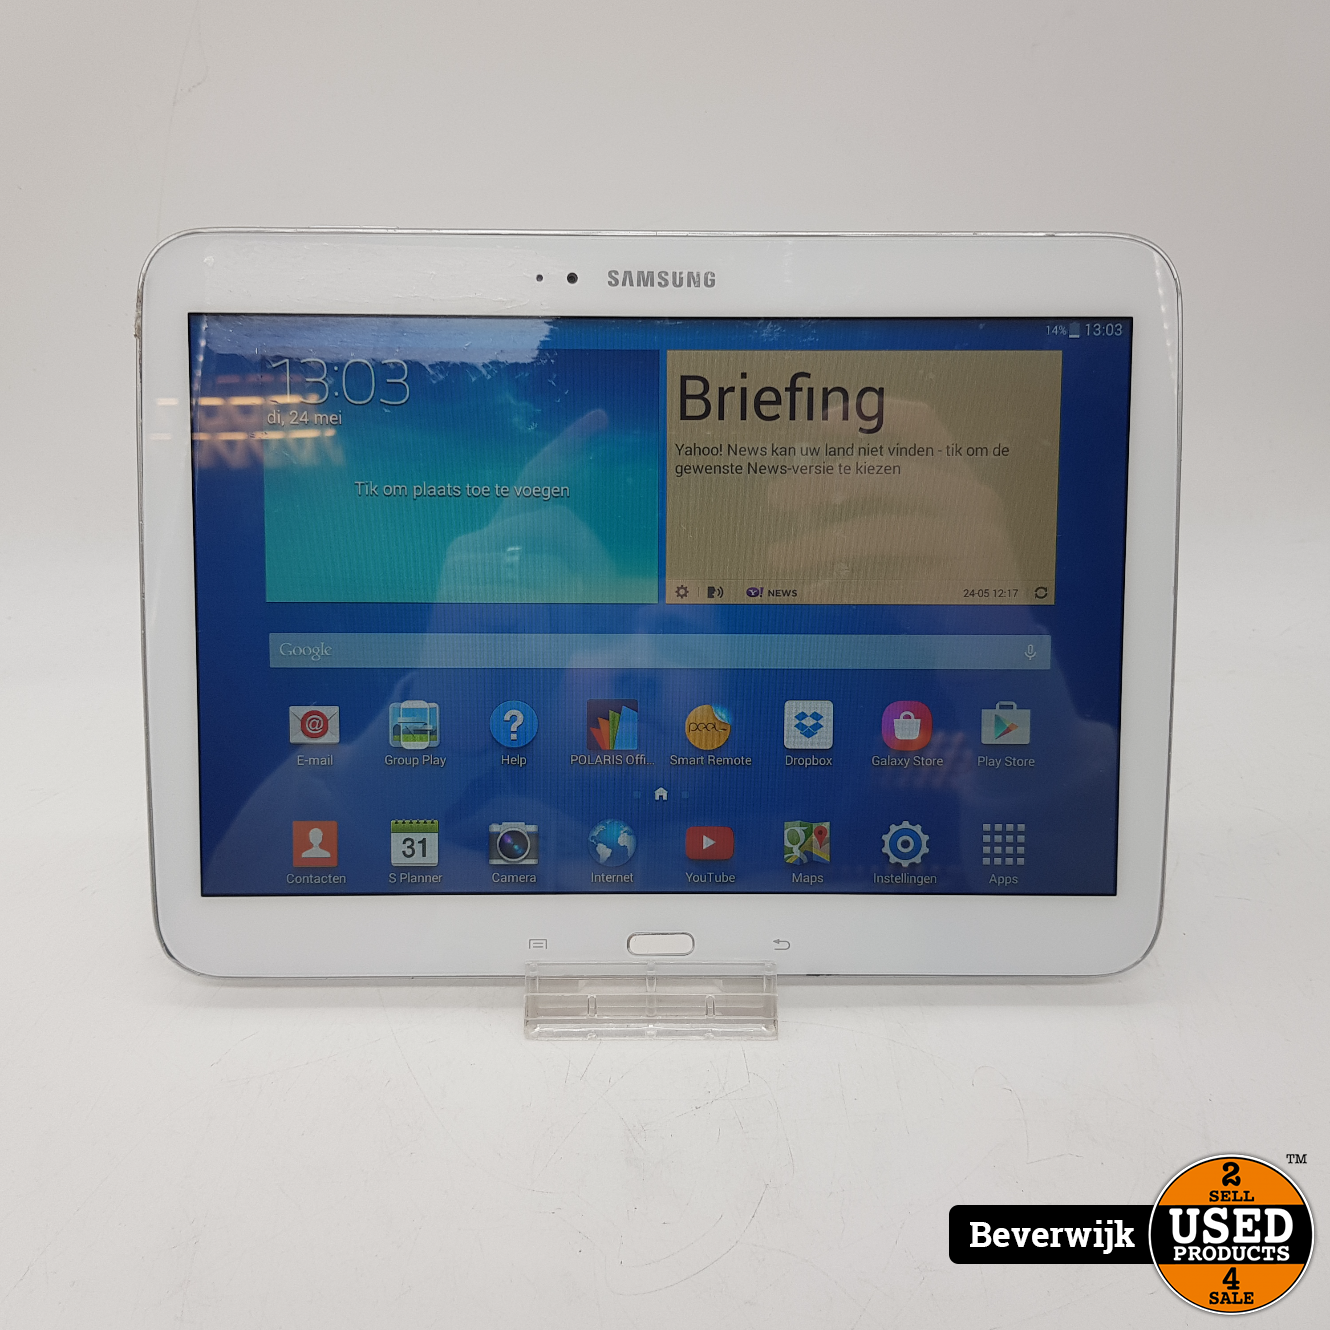 Samsung Galaxy Tab 3 10.1 16GB In Redelijke Staat! - Used Products Beverwijk